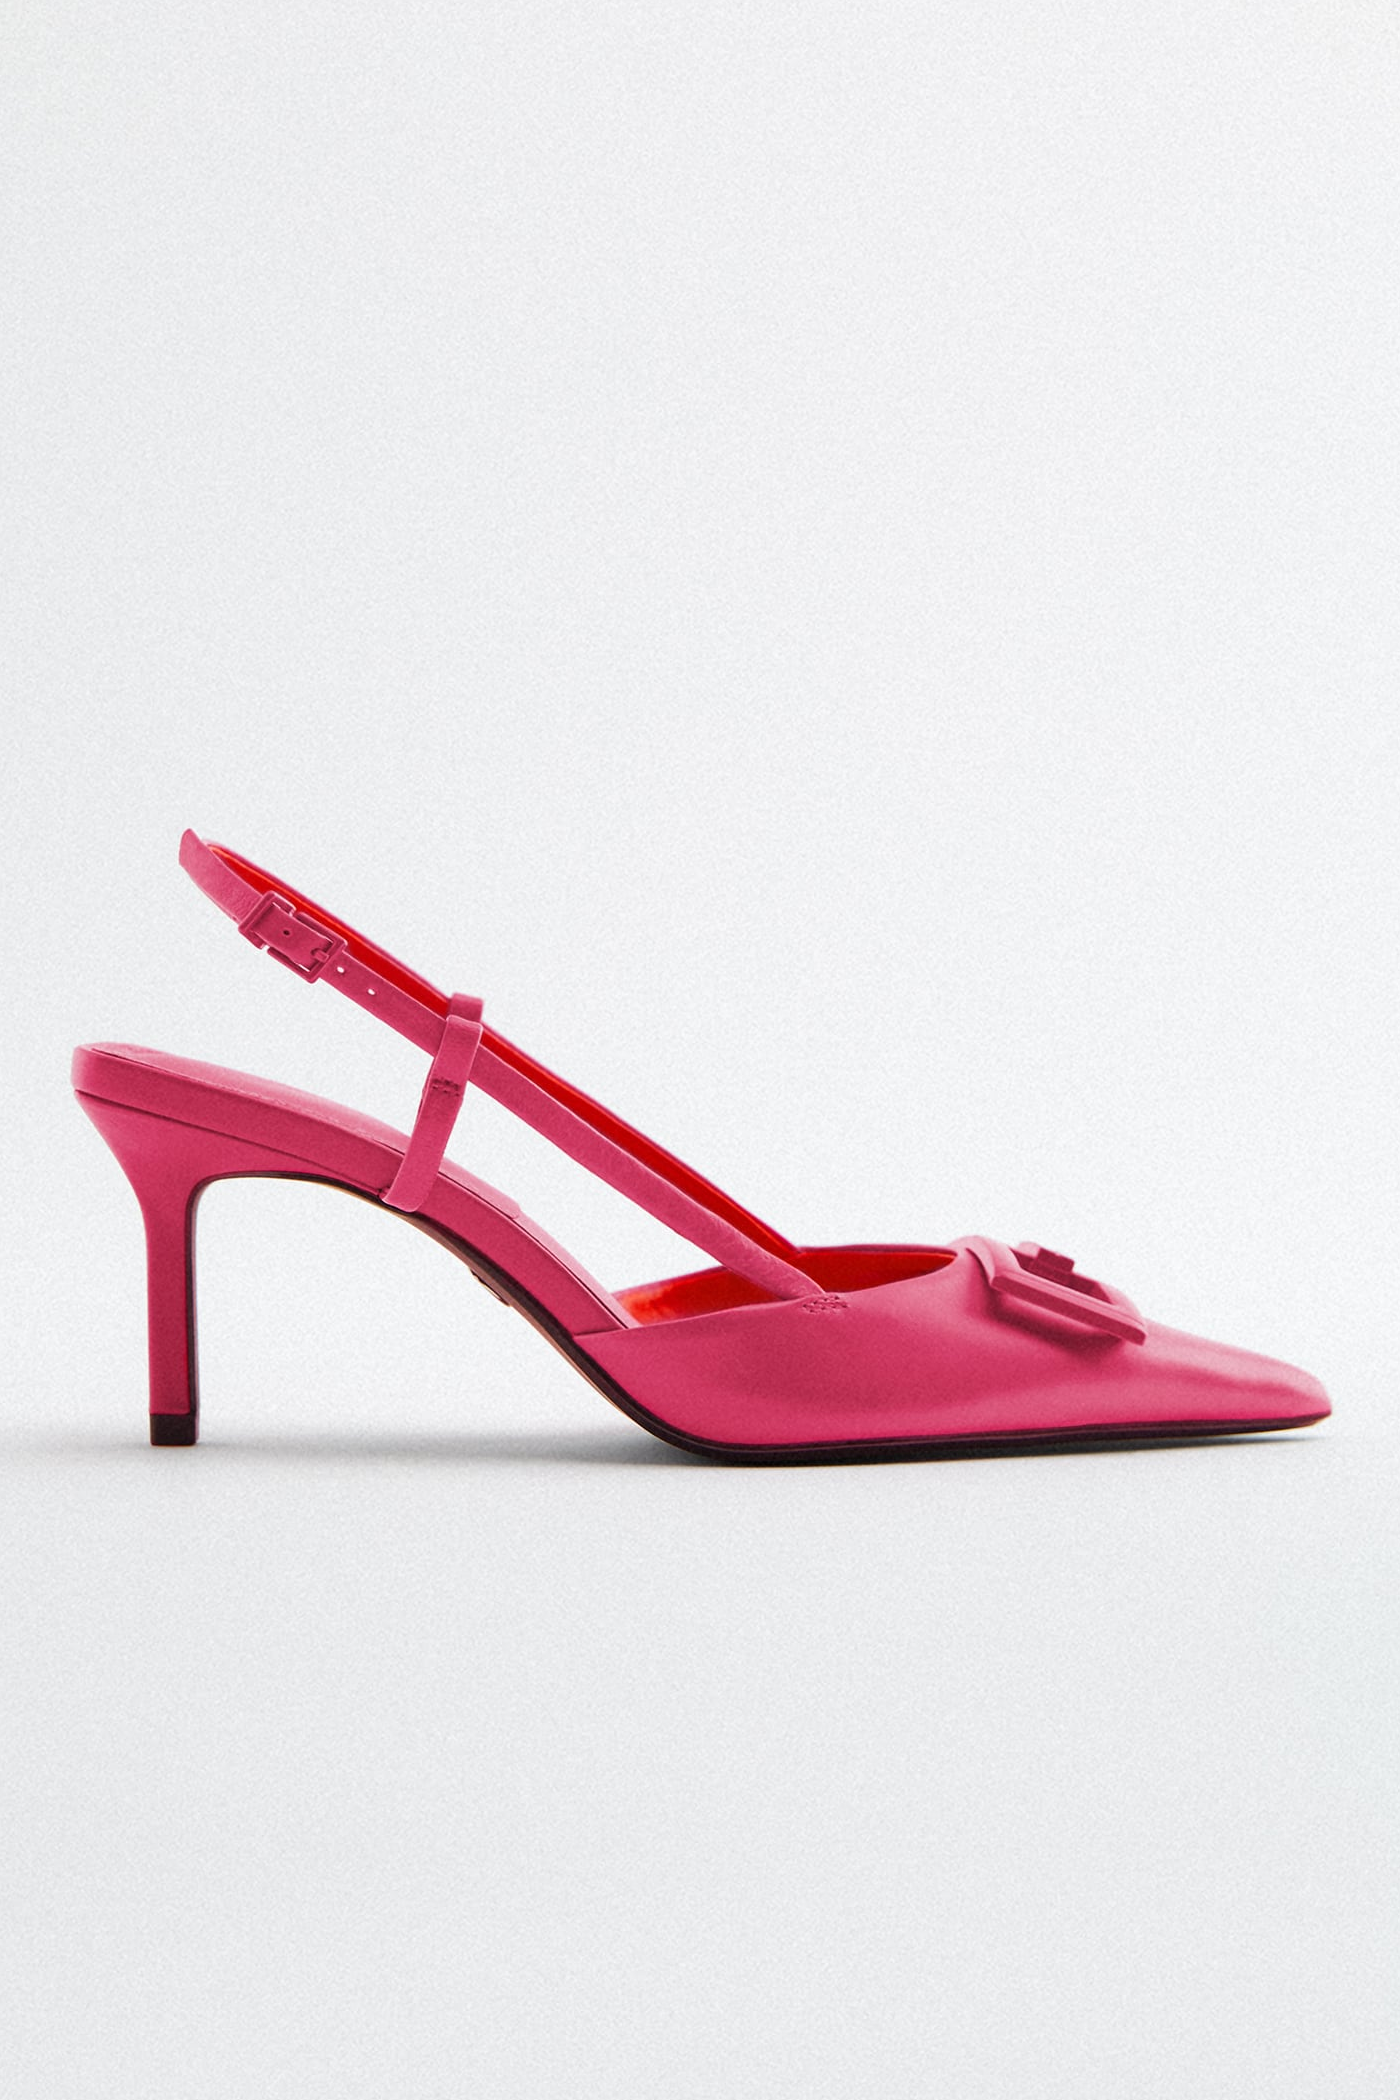 Zara Leather Backless High Heel Shoes, £59.99